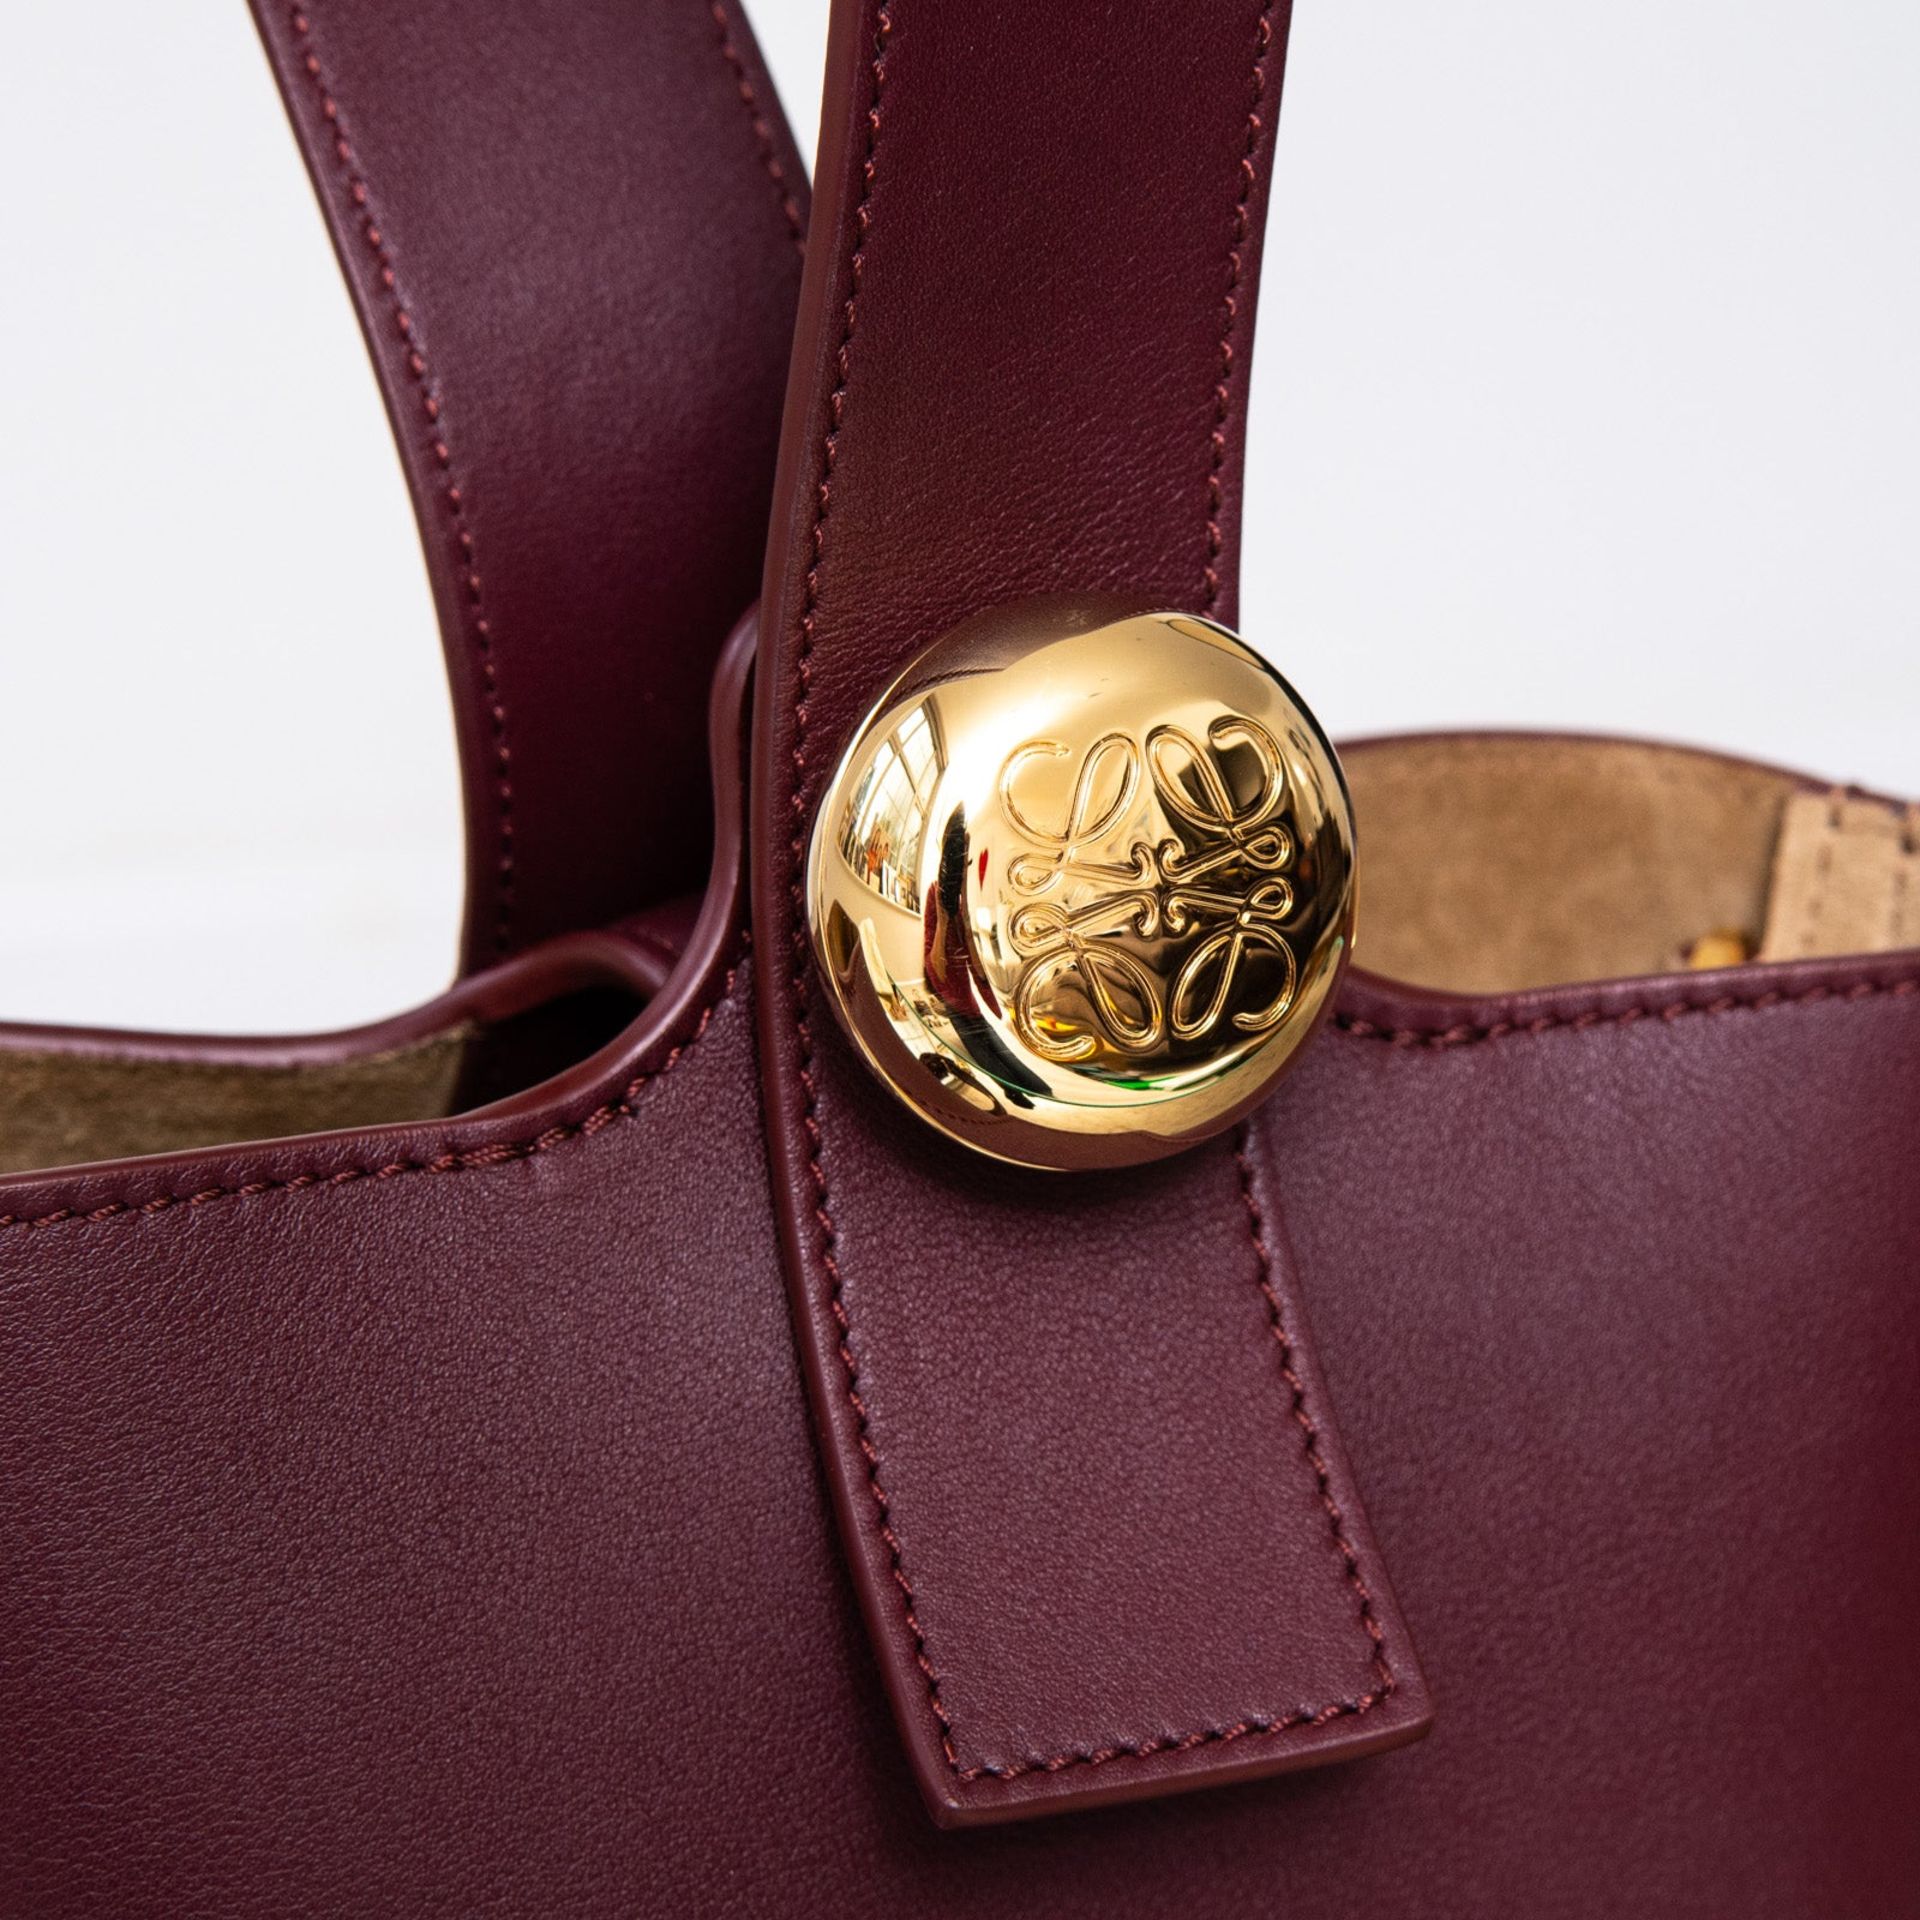 Loewe Burgundy Pebble Leather Bag - Image 2 of 8